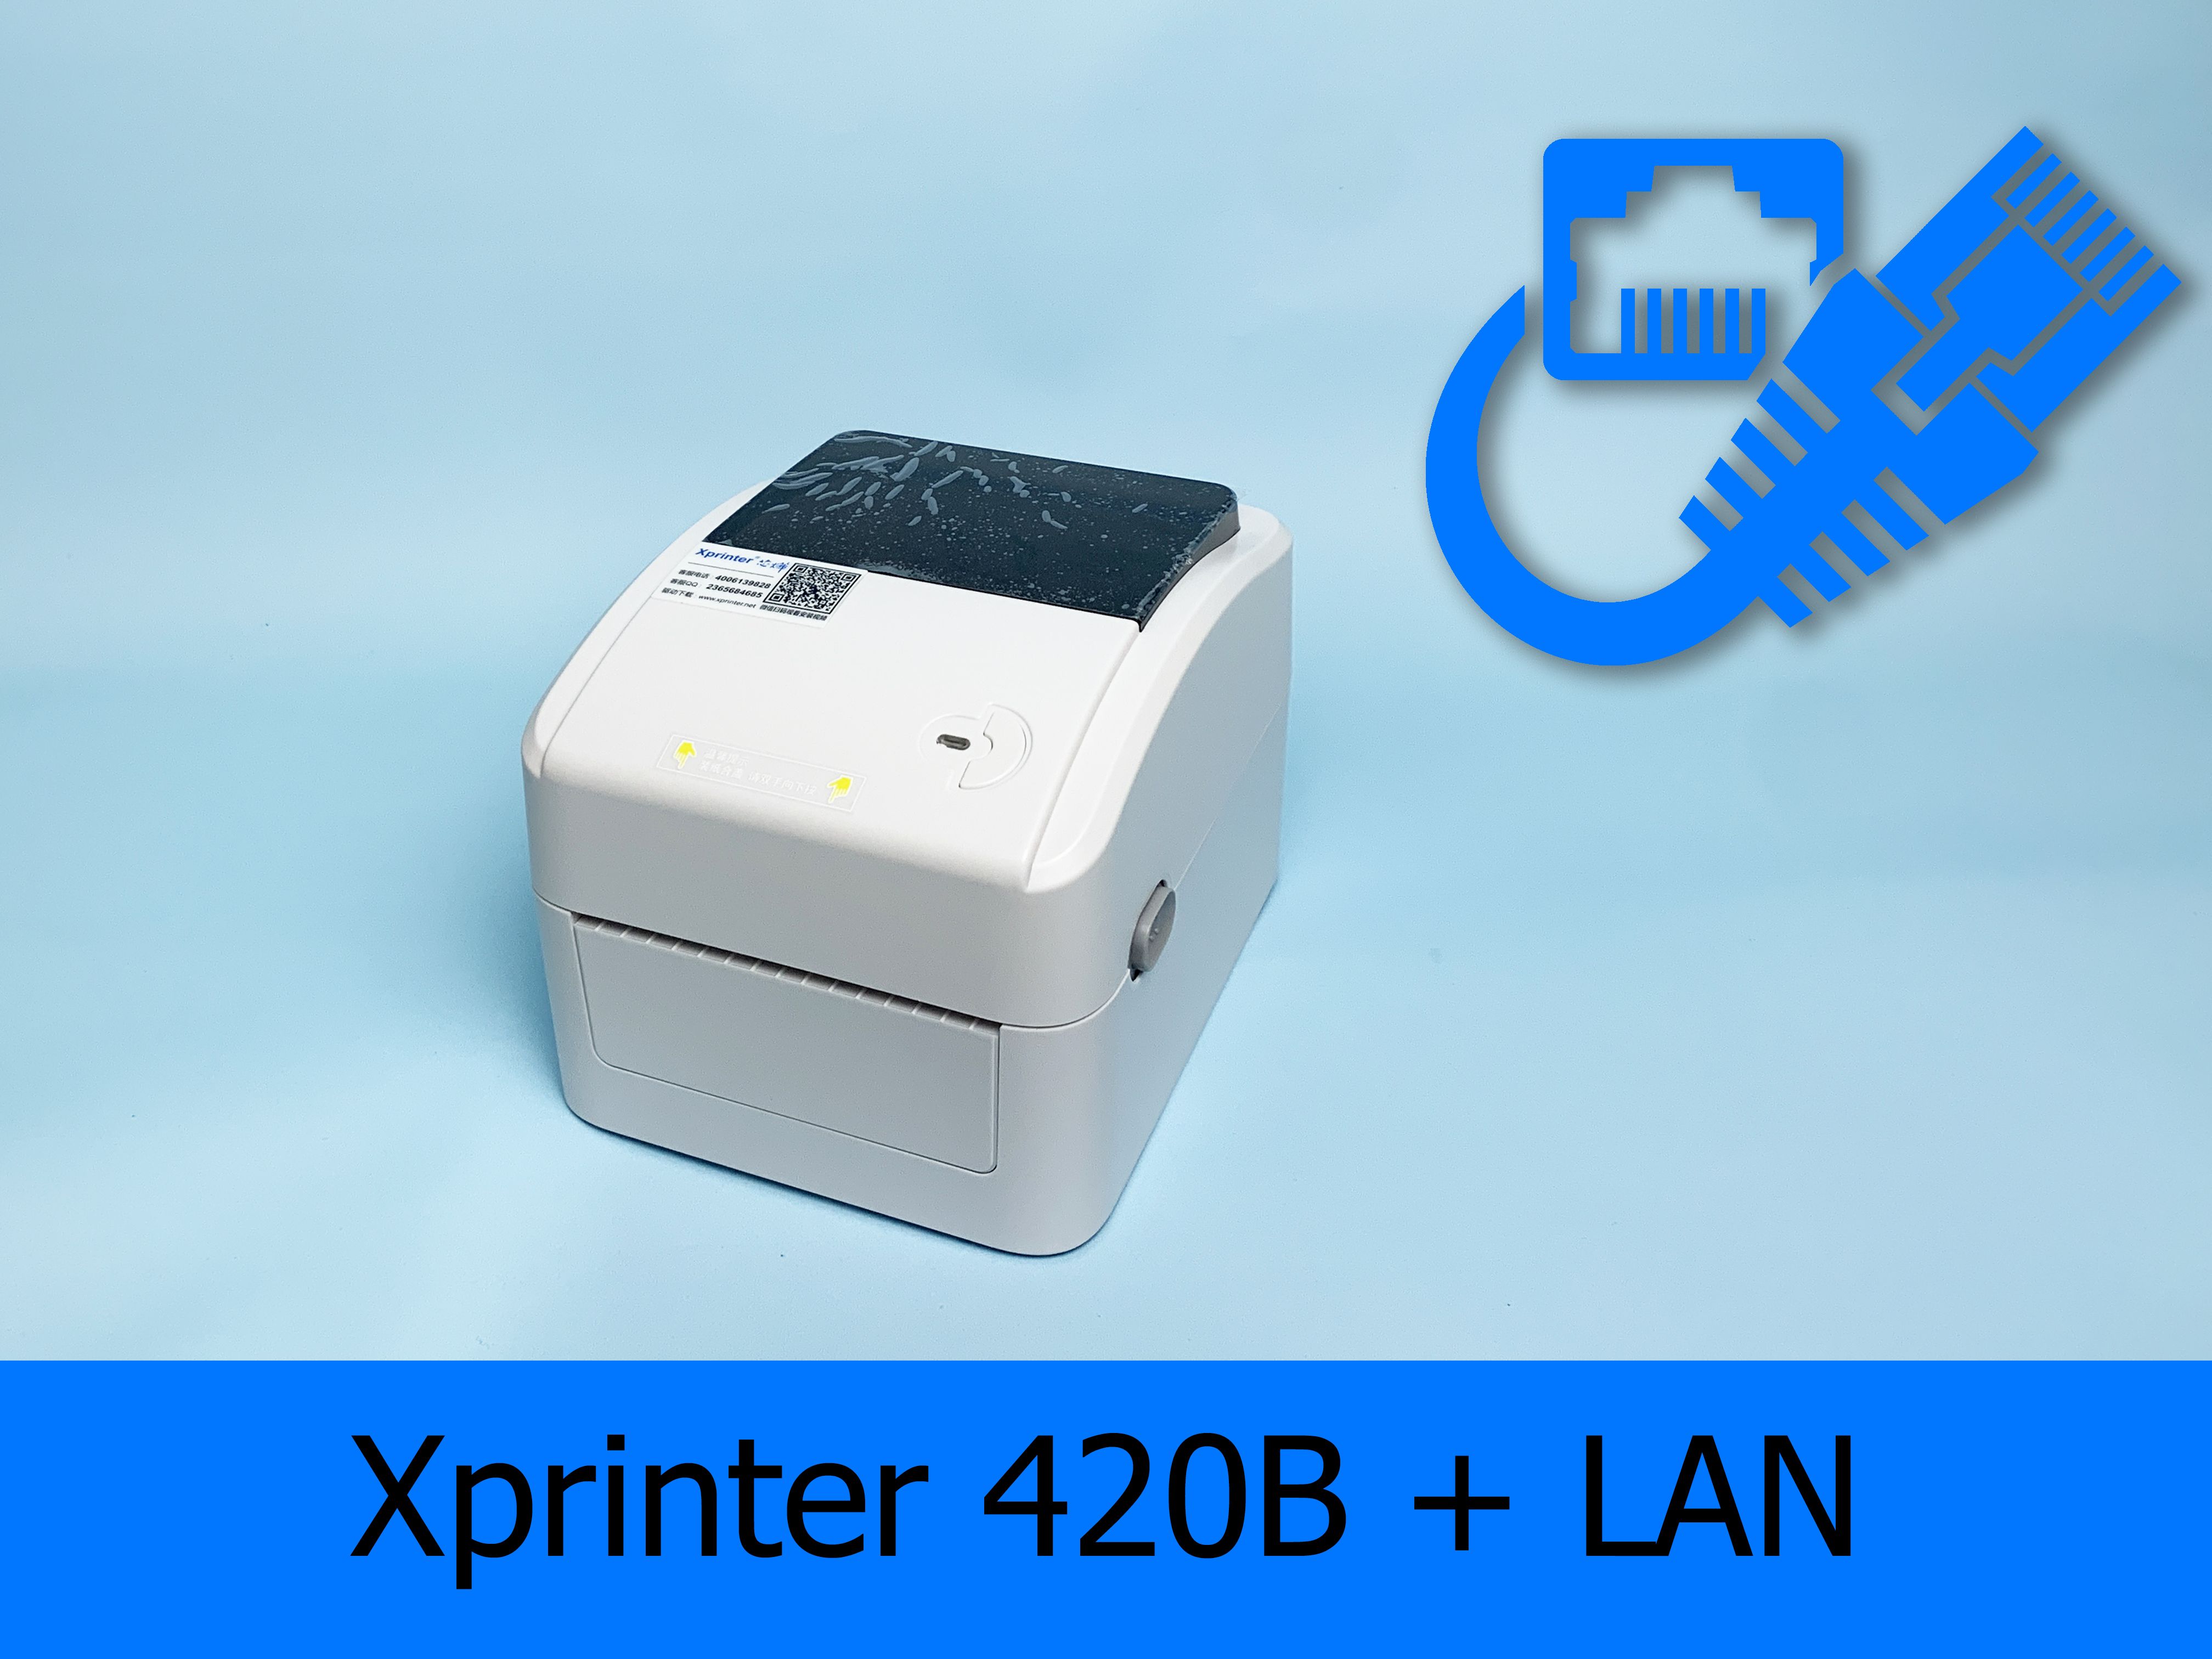 Этикеток xprinter xp 420b